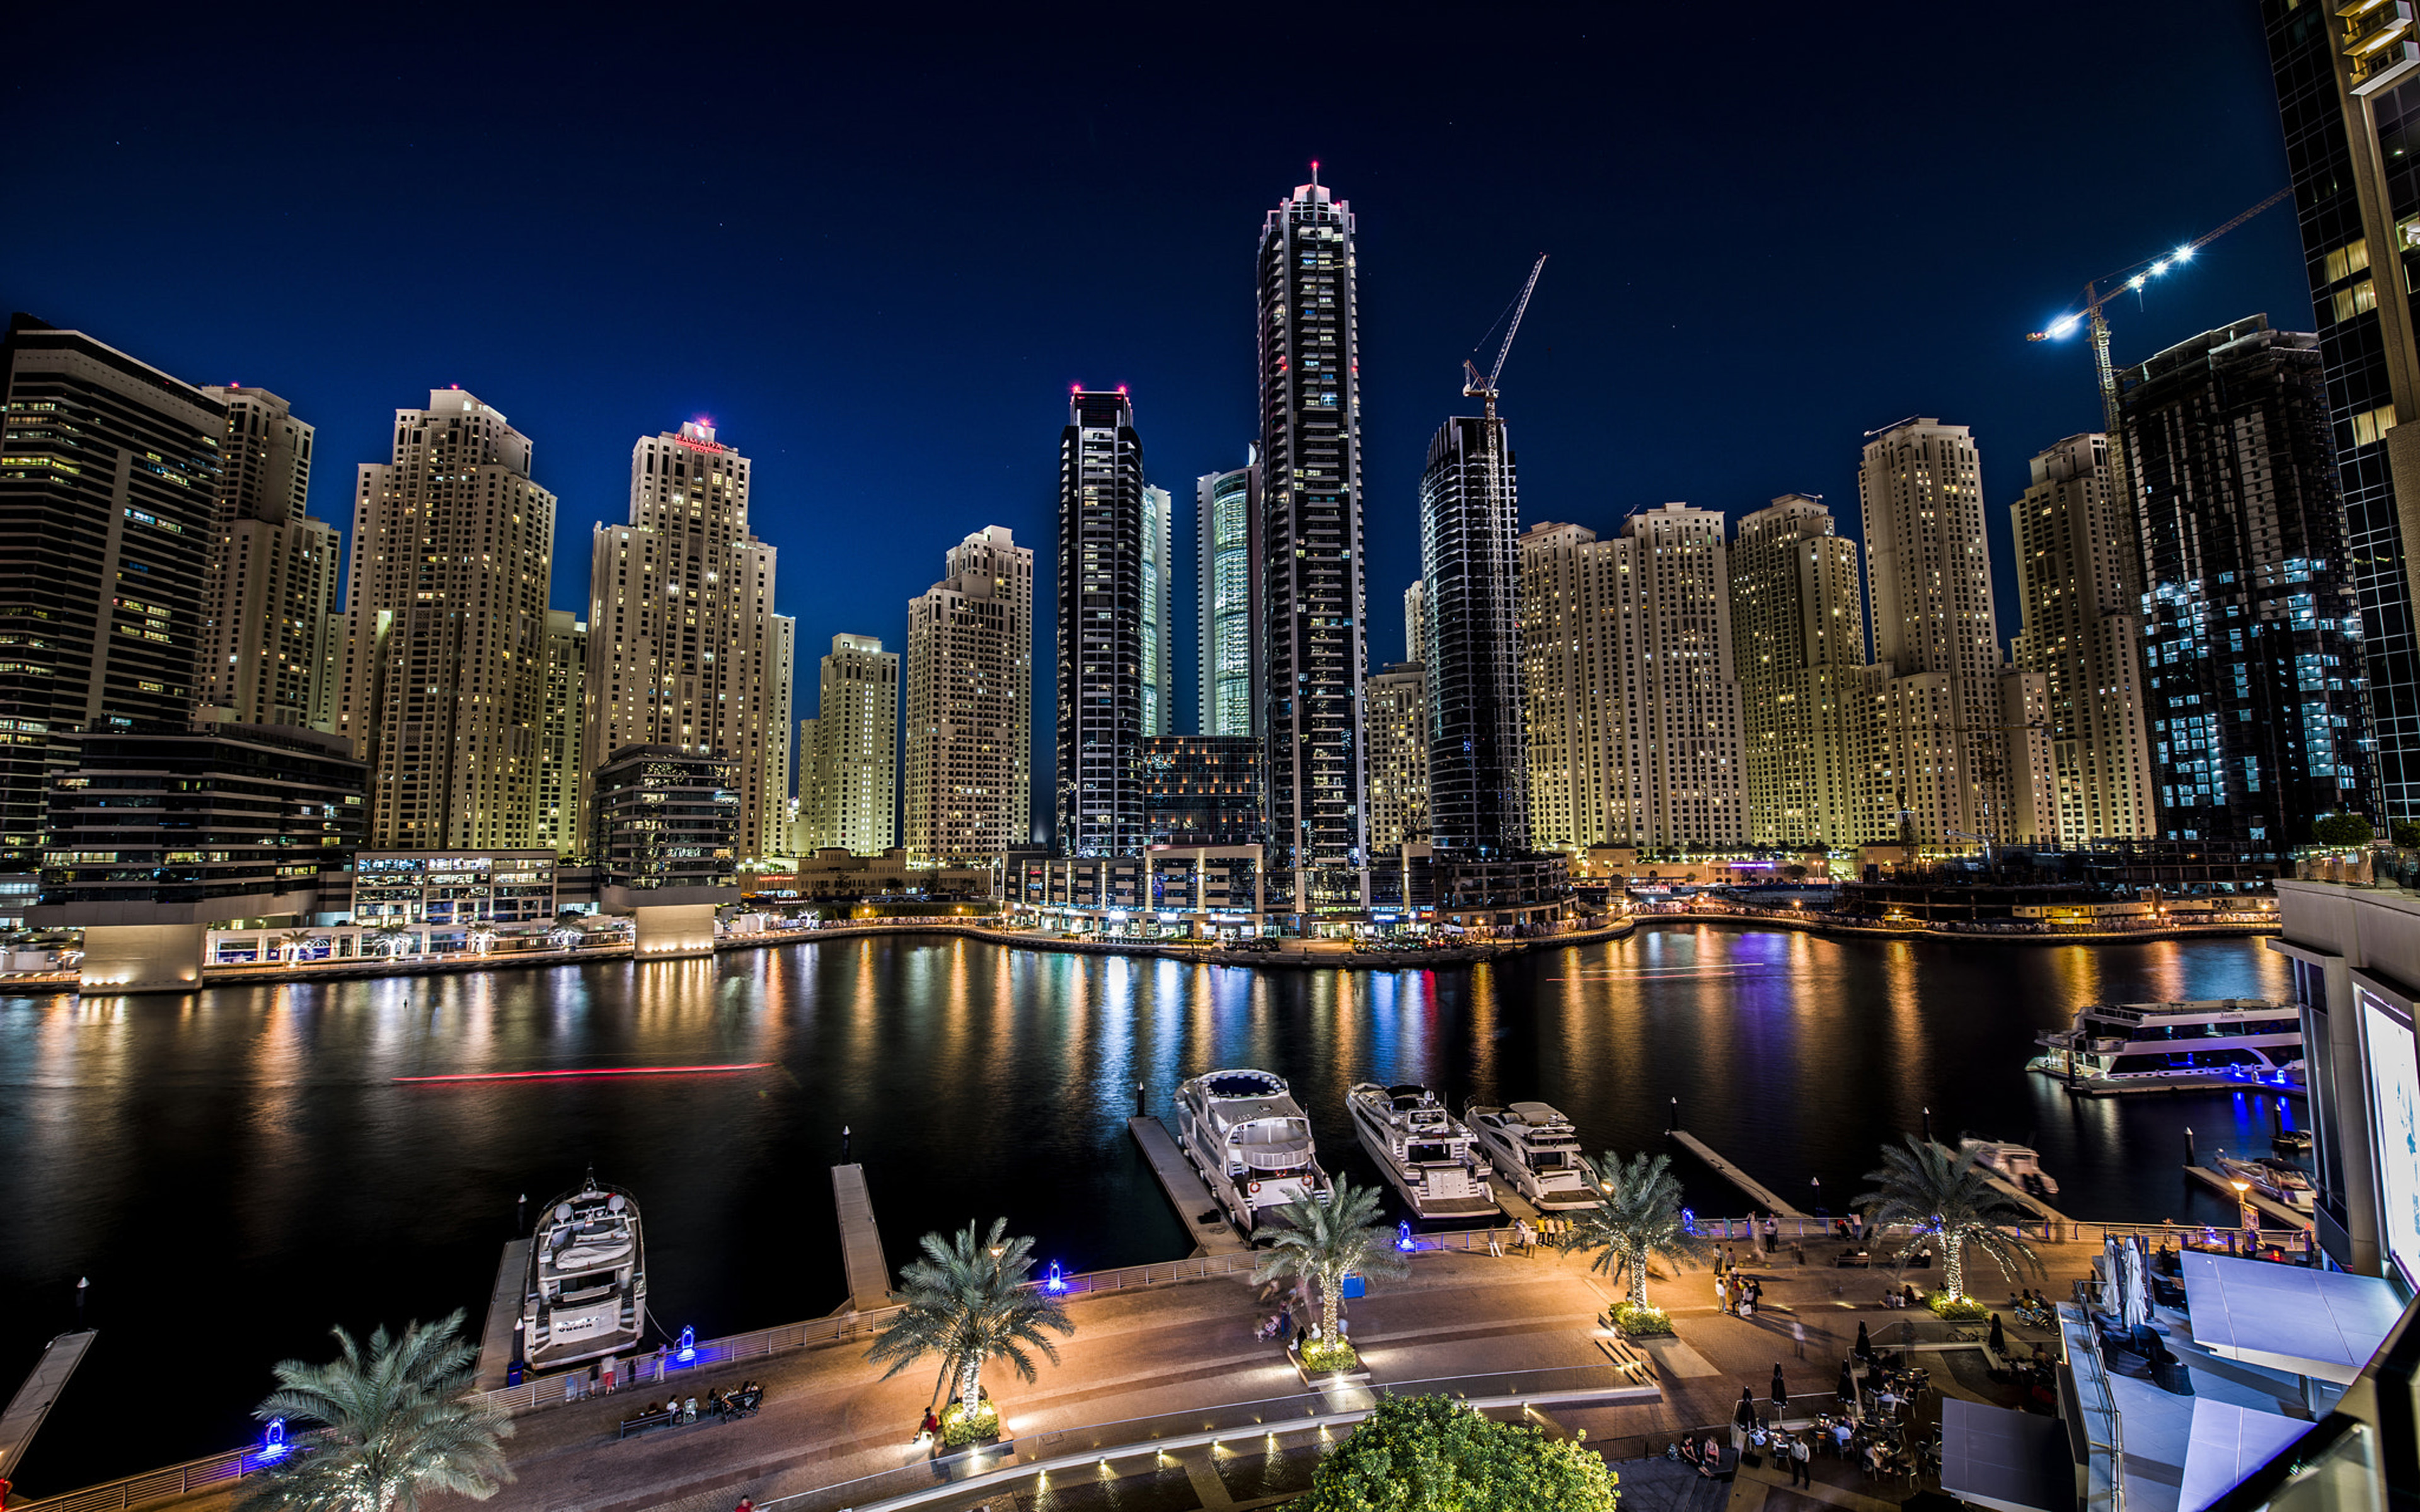 Dubai Marina Night Light City Landscape United Arab Emirates Ultra Hd  Wallpaper For Desktop Mobile Phones And Laptops 3840x2400 : 